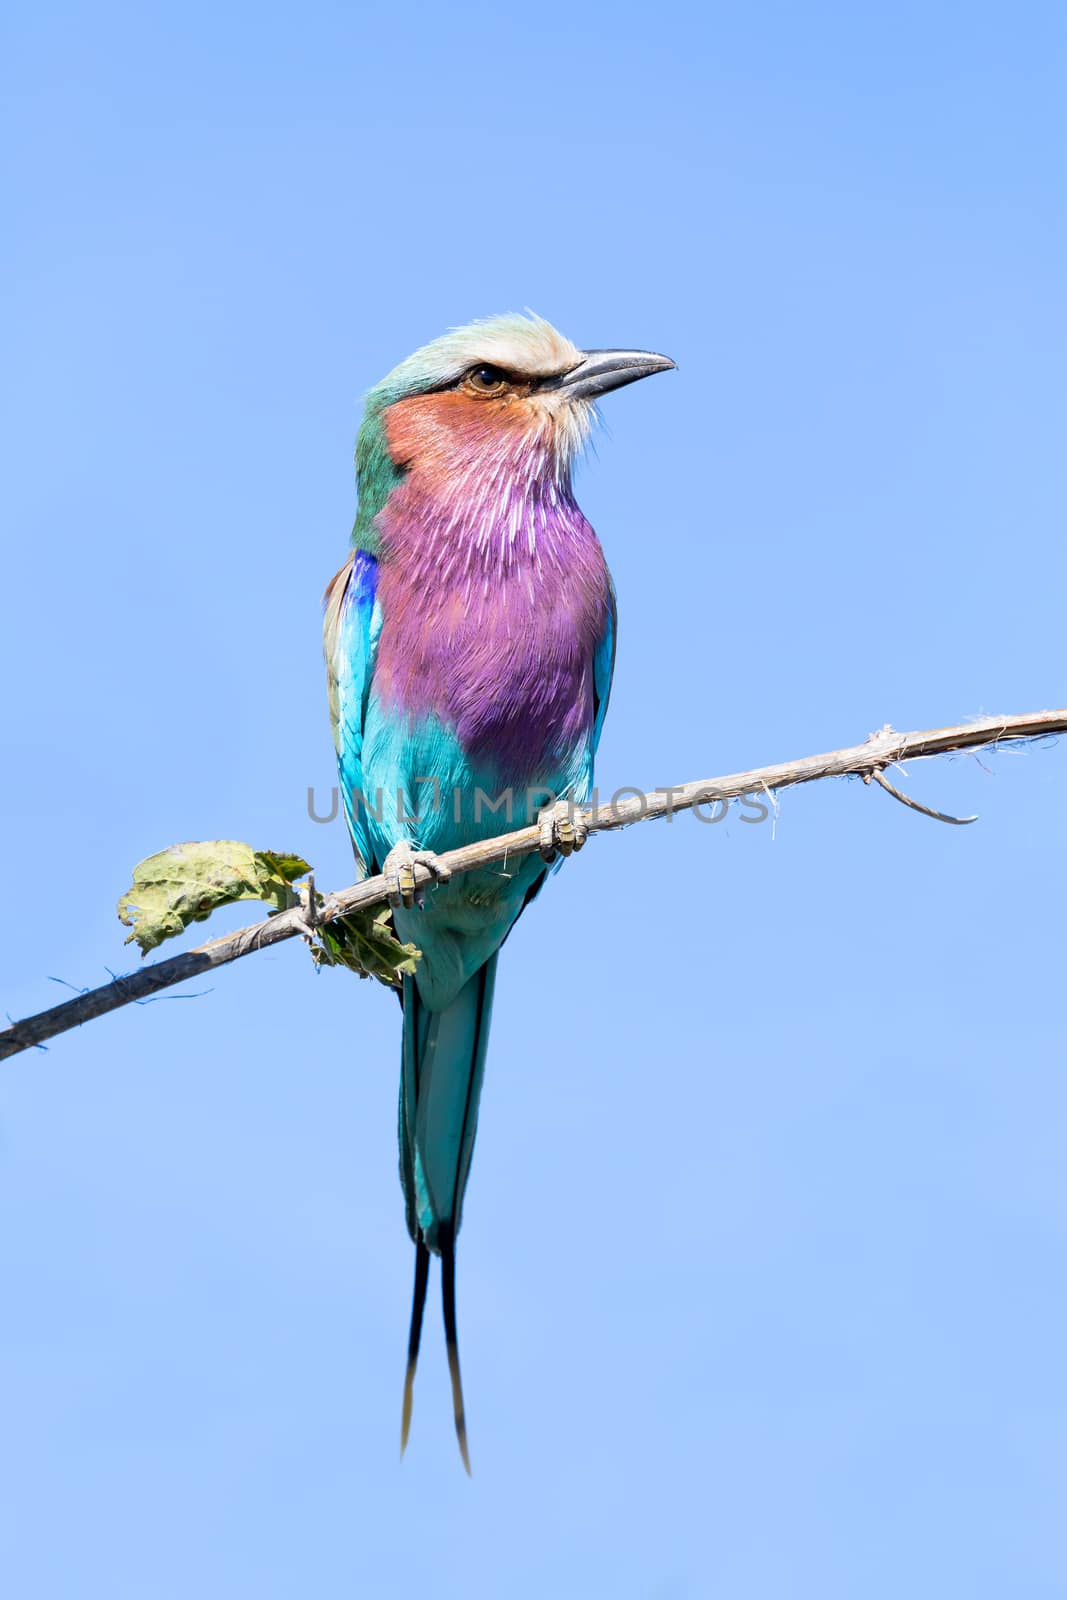 Beautiful colored bird Lilac-brested roller, Coracias caudata, Moremi game reserve, Botswana safari and wildlife.